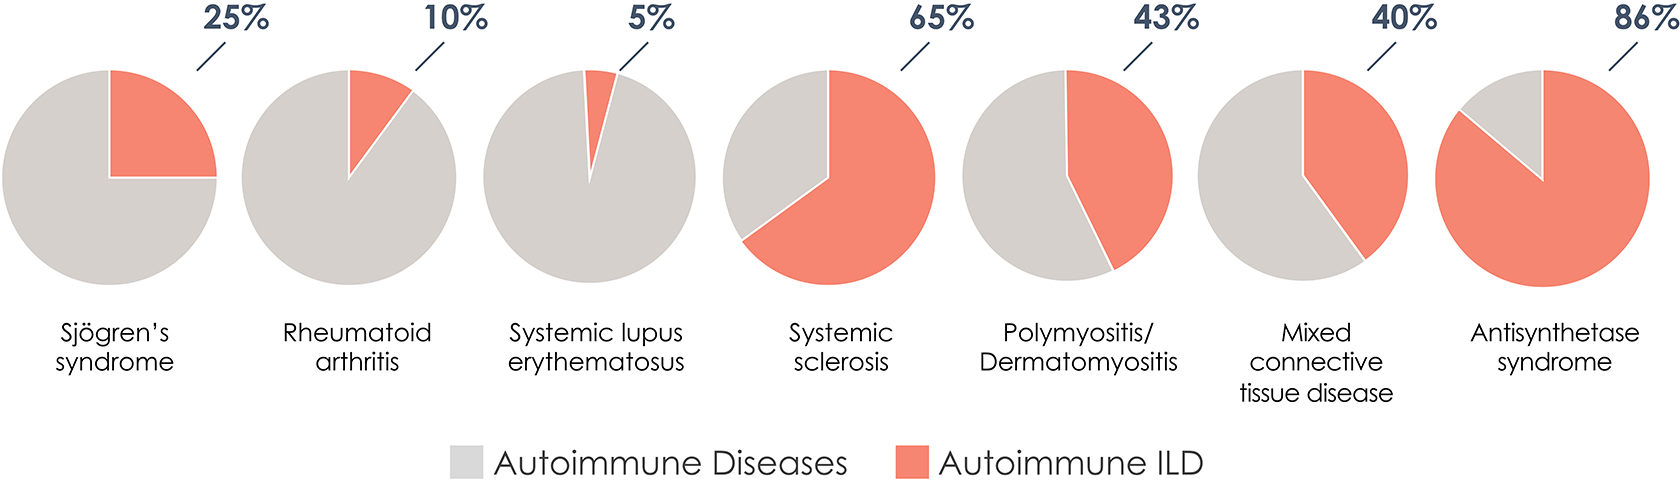 Prevalence of ILD among Autoimmune Diseases Charts